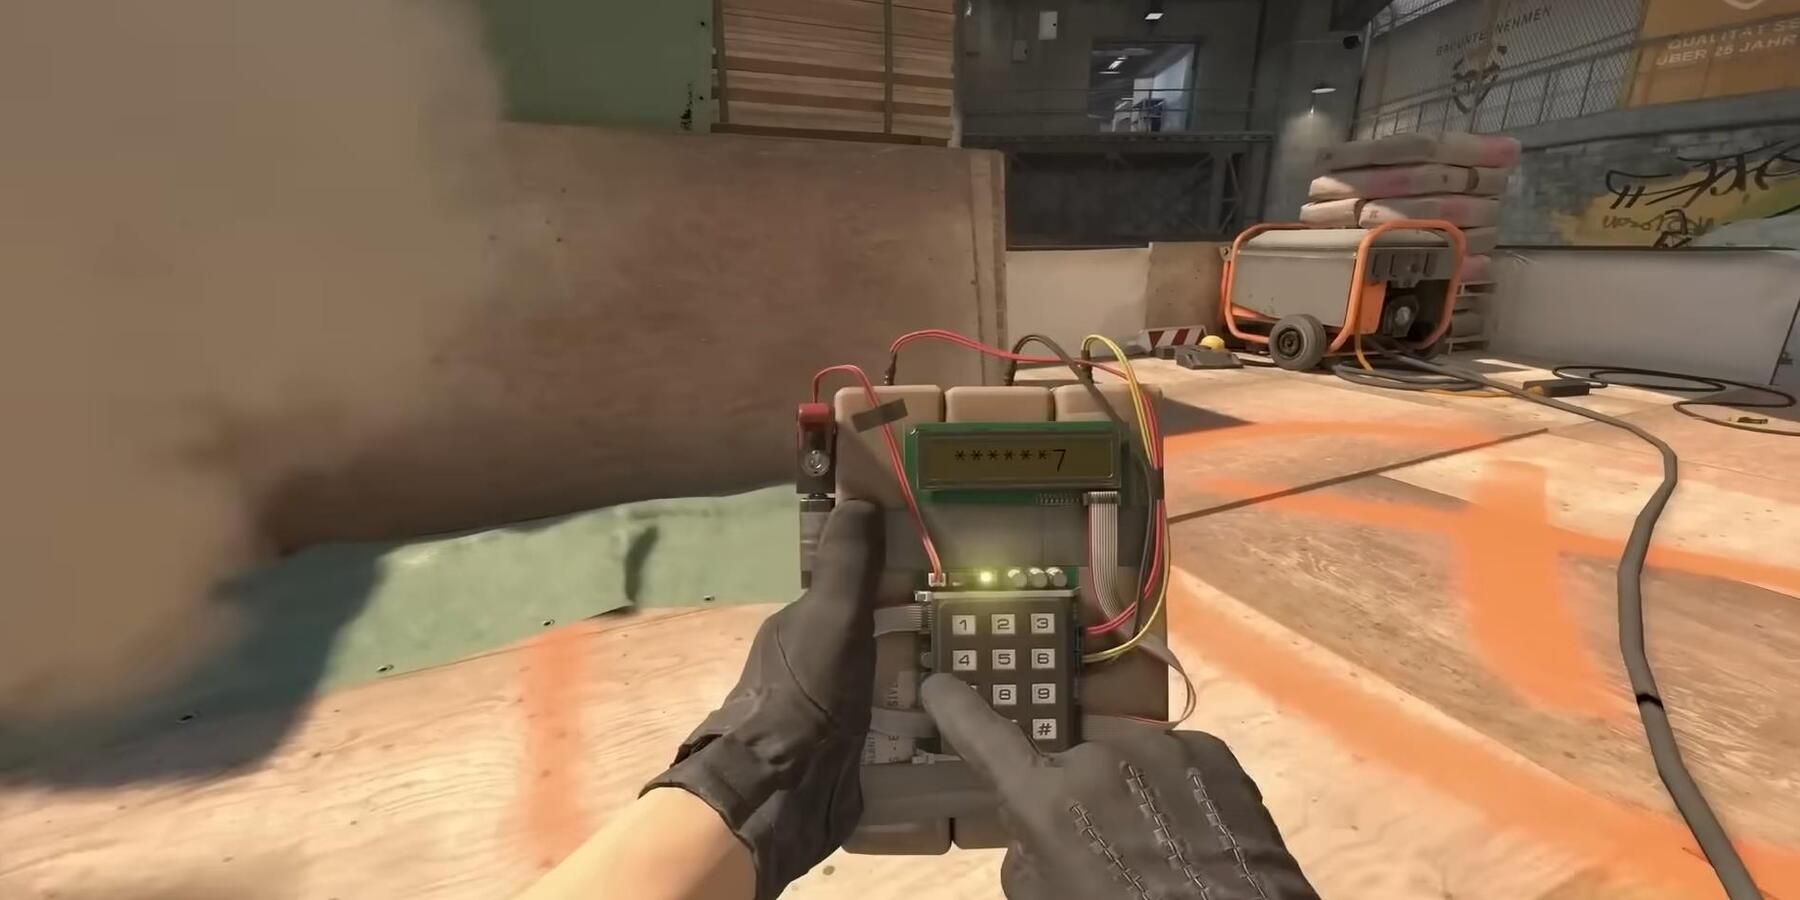 Valve Unveils Counter Strike 2 Release Date